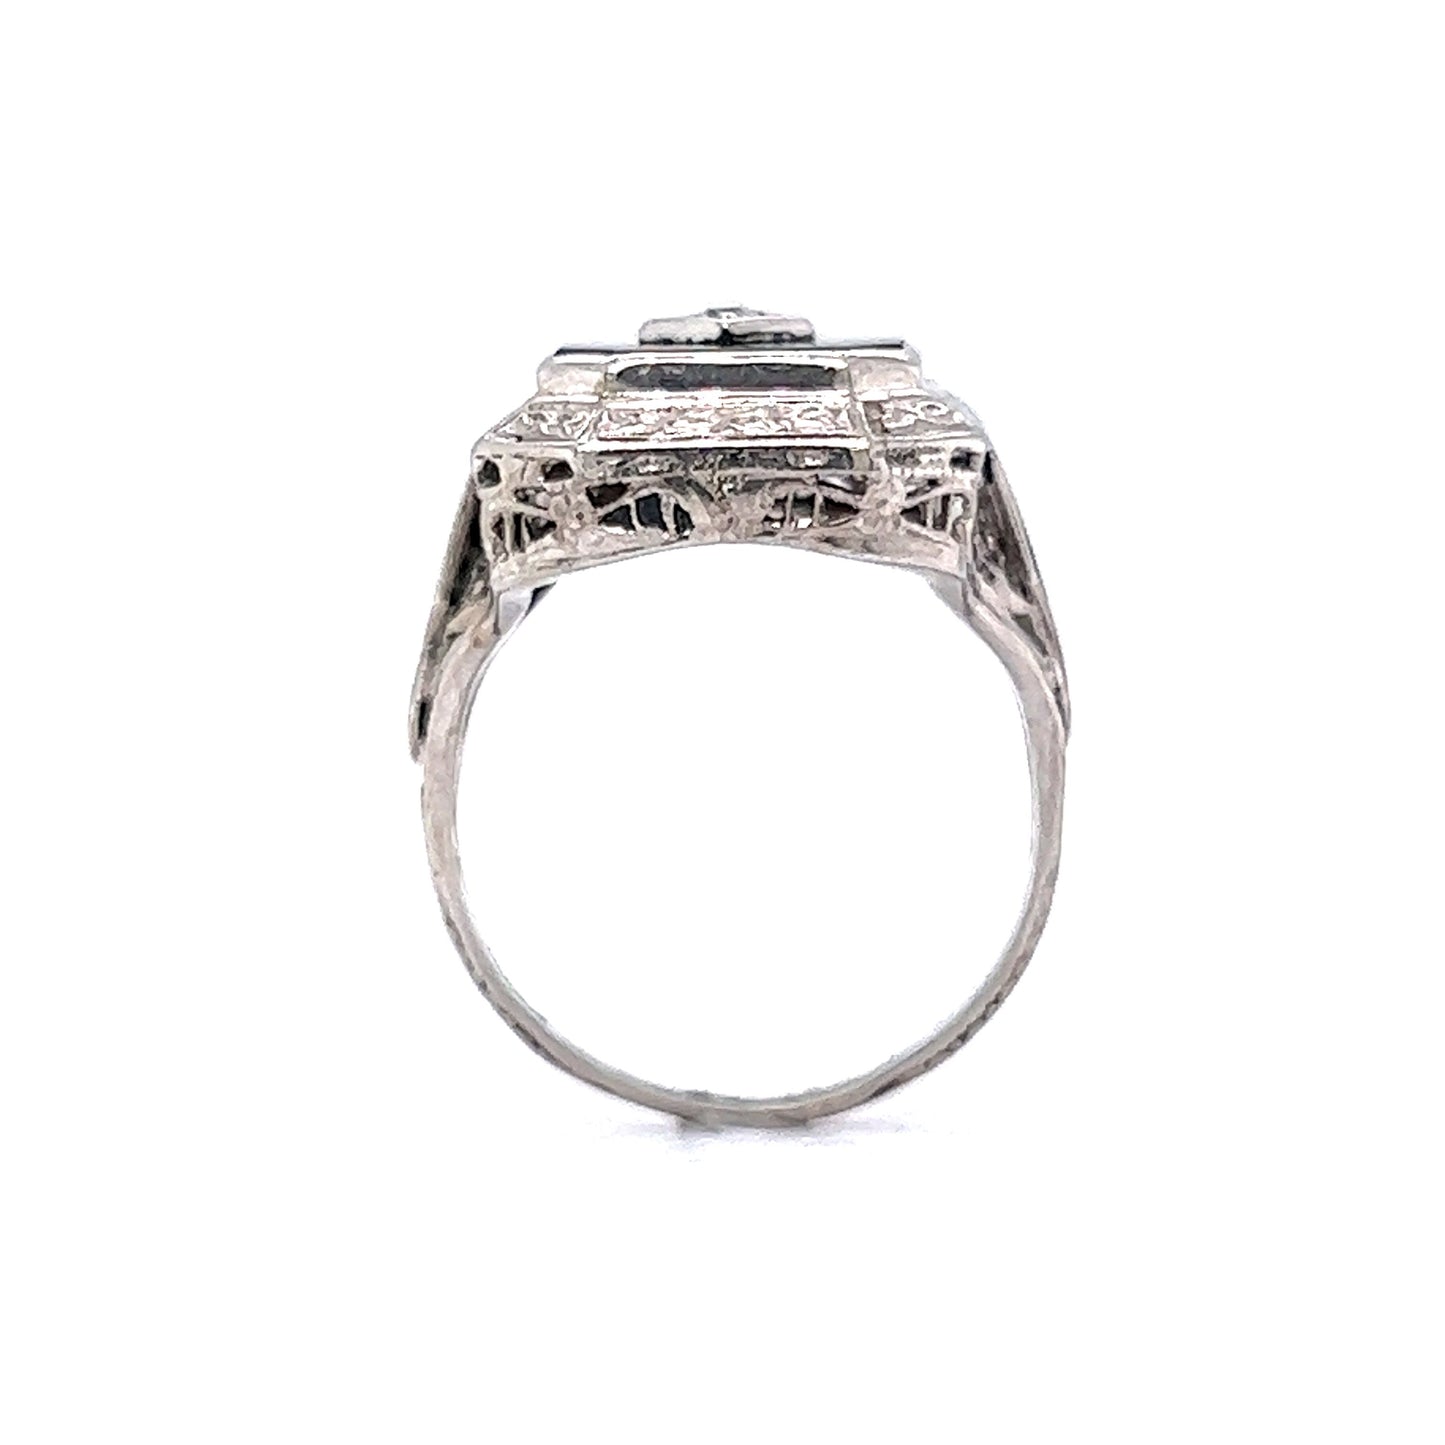 Art Deco Rectangular Onyx and Diamond Ring in 14k White Gold